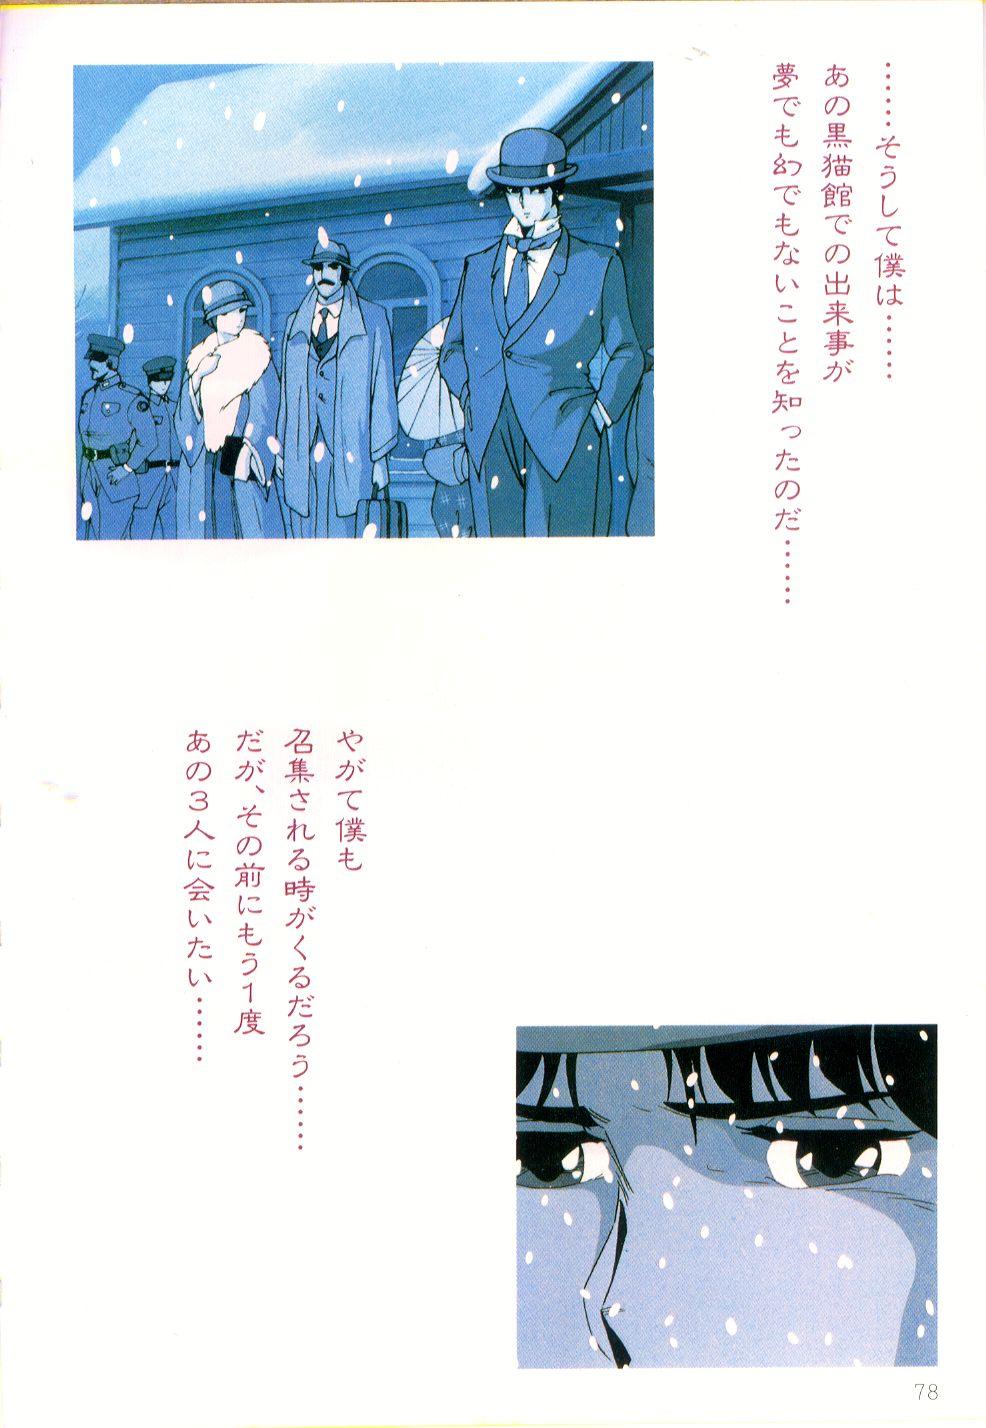 Cream Lemon Film Comics - Cream Lemon Part 11: Kuro Neko Kan 79